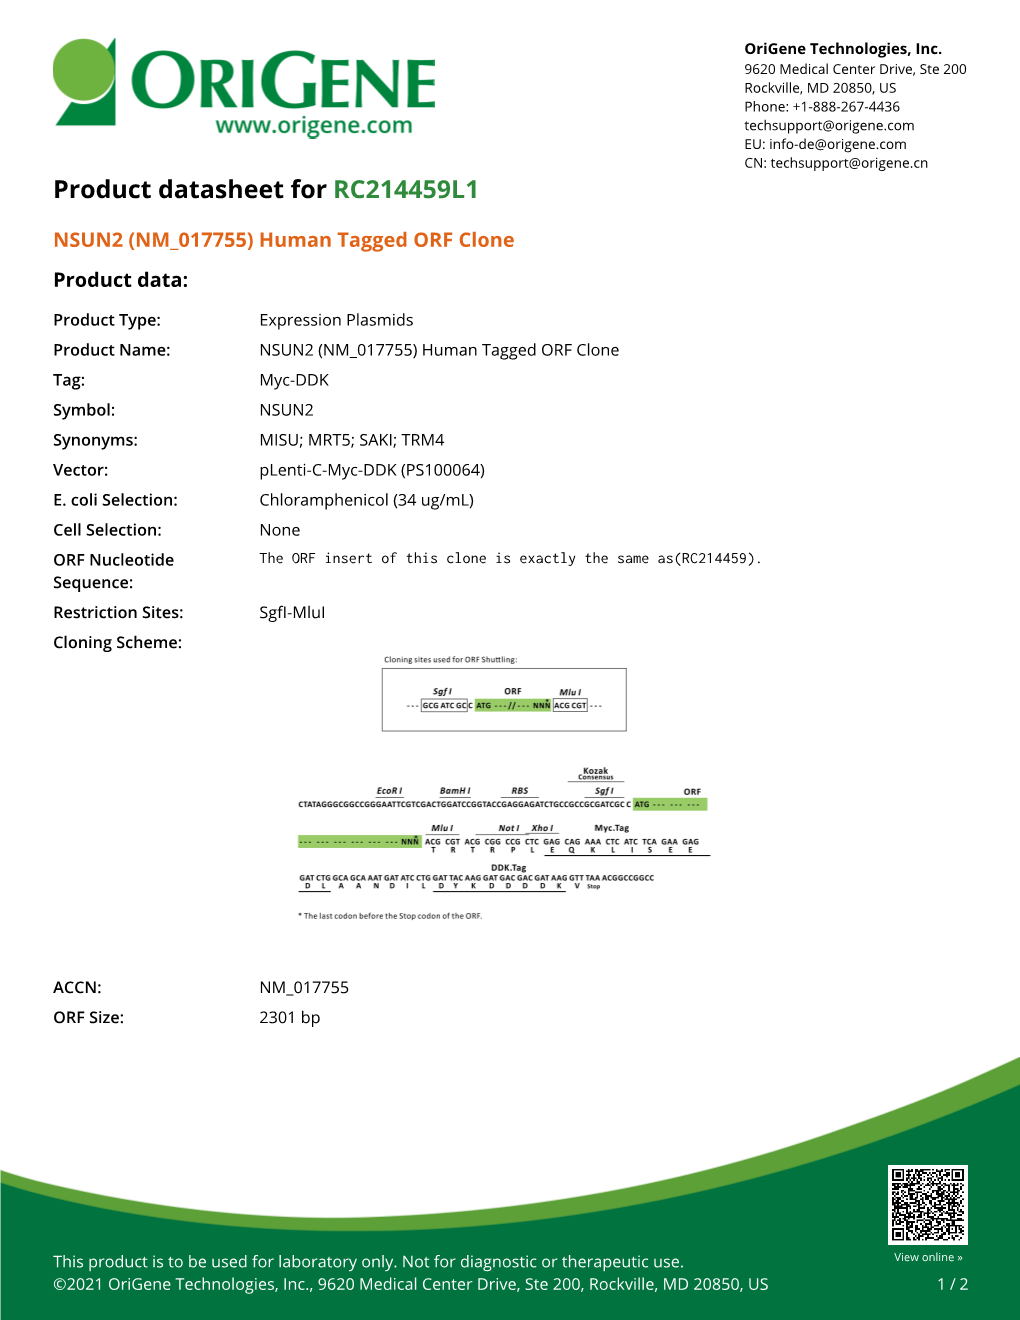 NSUN2 (NM 017755) Human Tagged ORF Clone Product Data